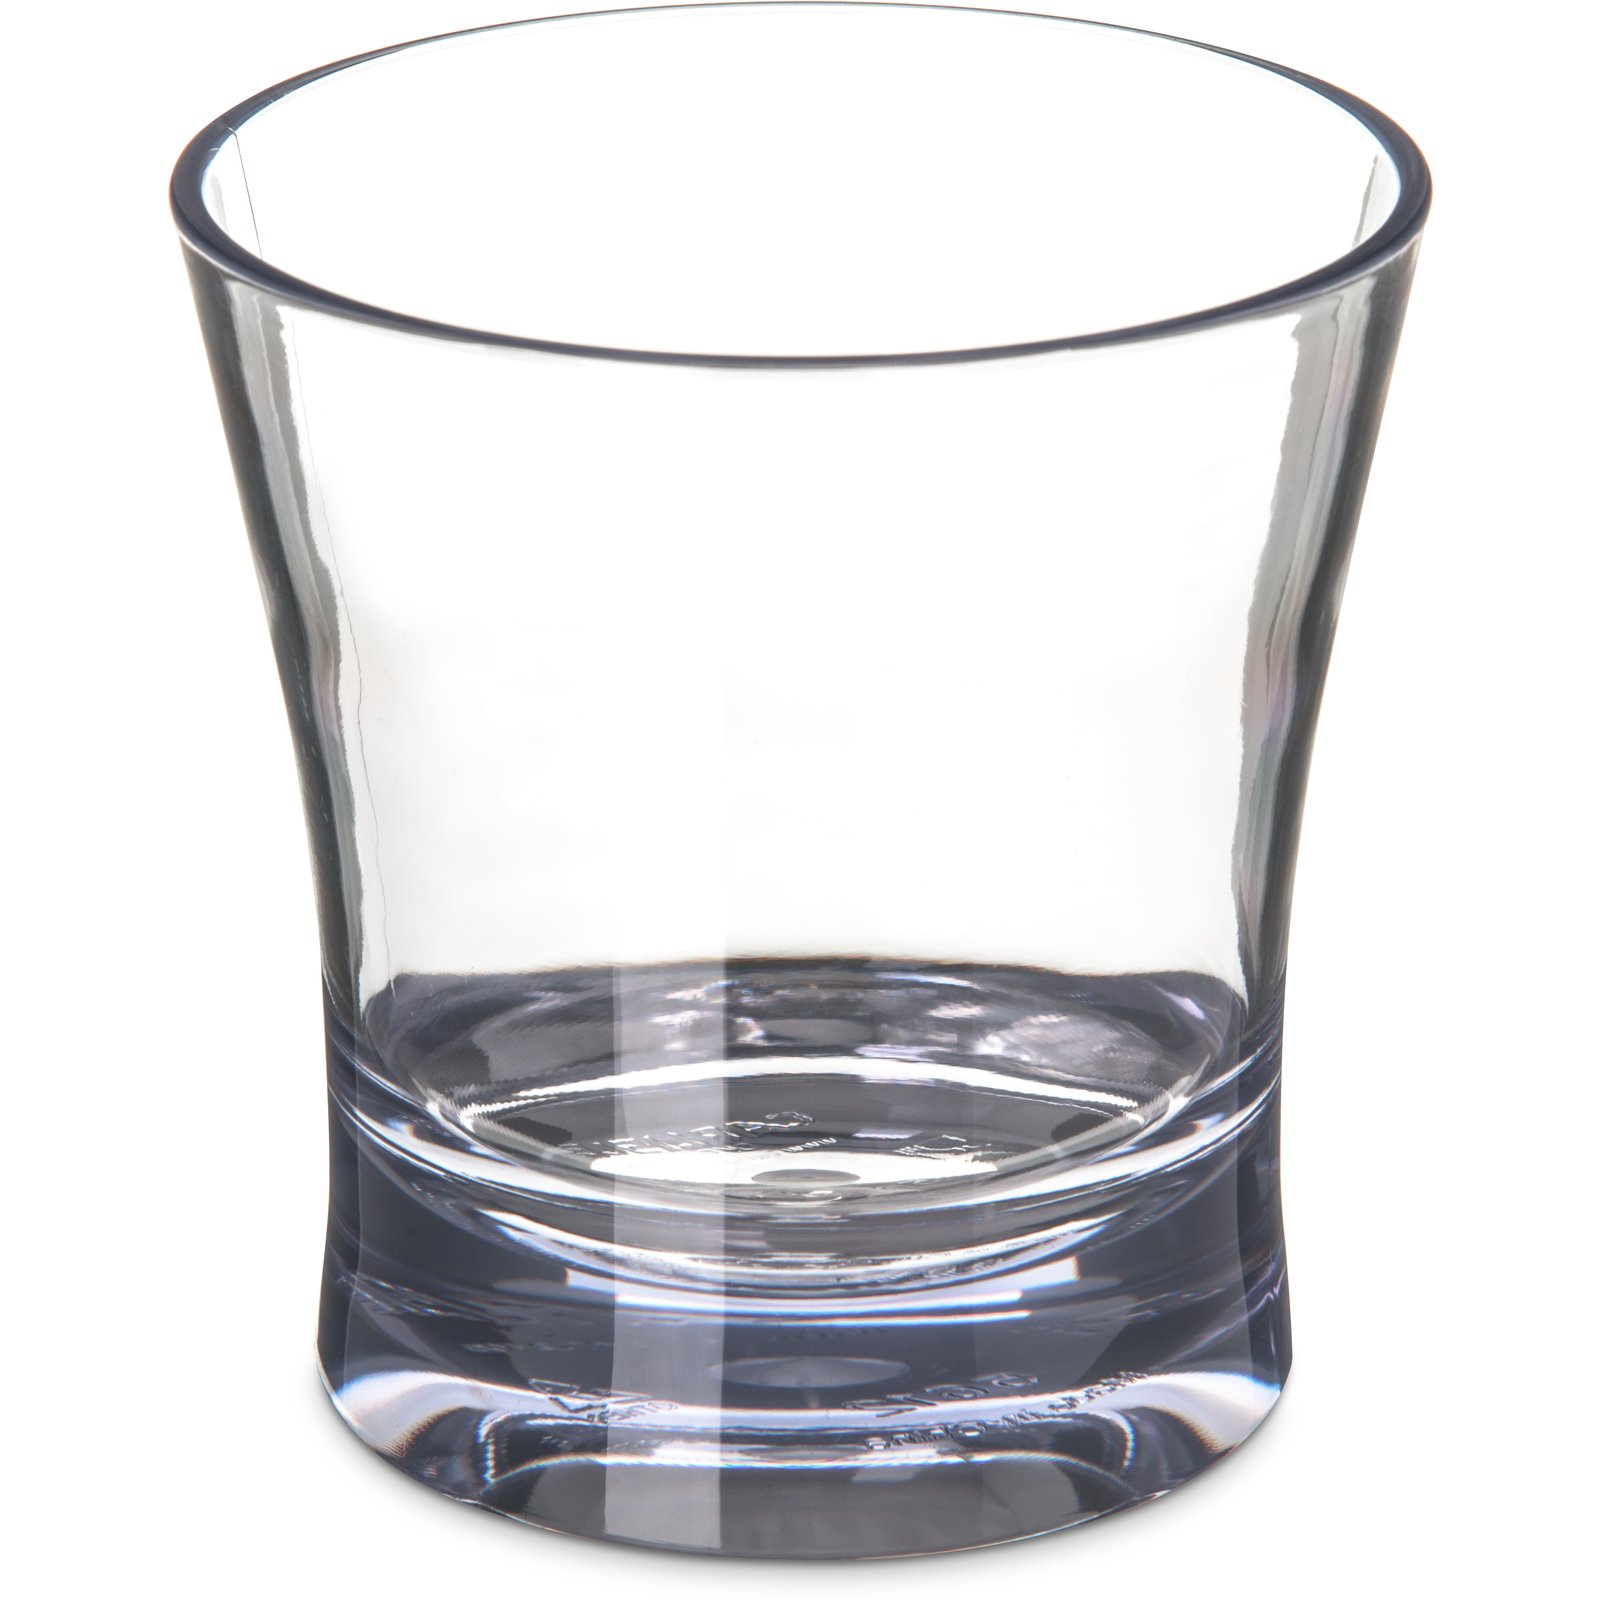 ALIBI 12oz DOUBLE OLD
FASHIONED CLEAR PLASTIC GLASS 
24/CS